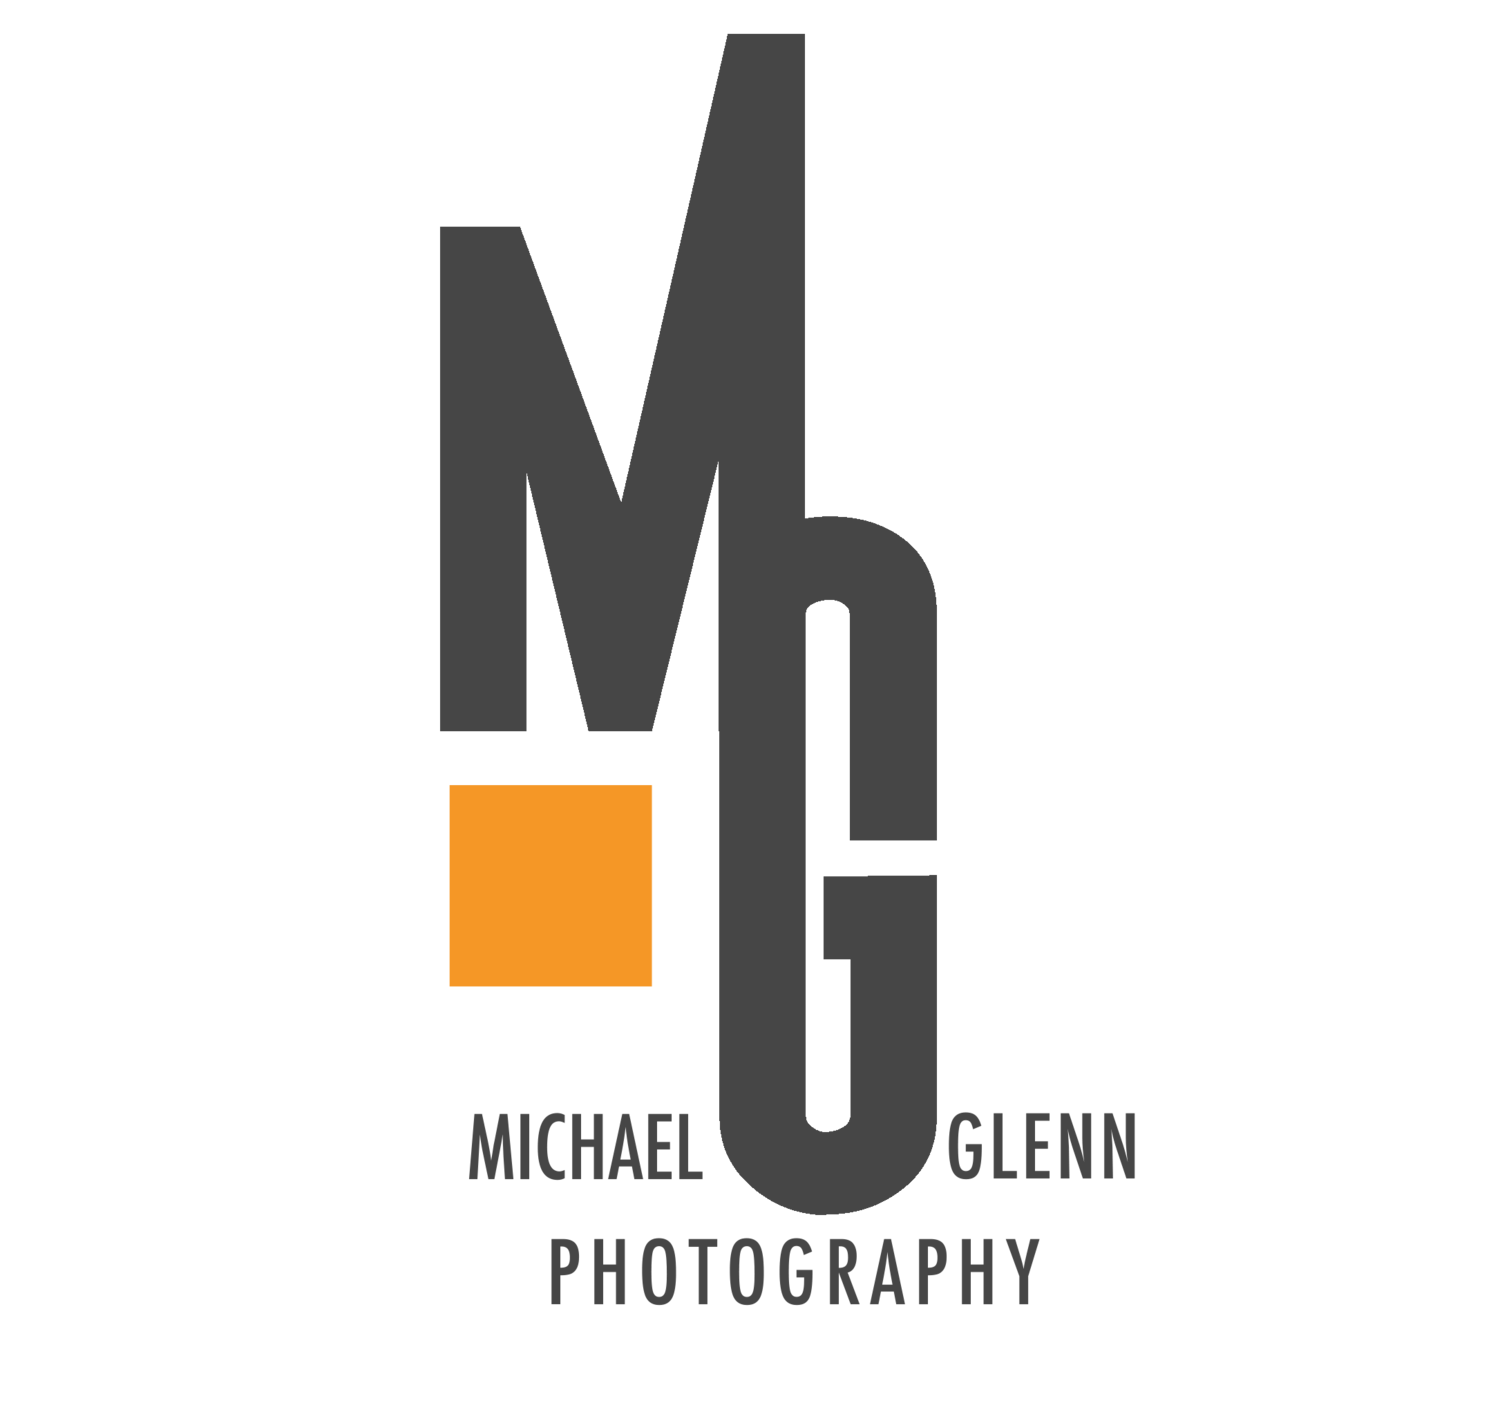 Michael Glenn Photography